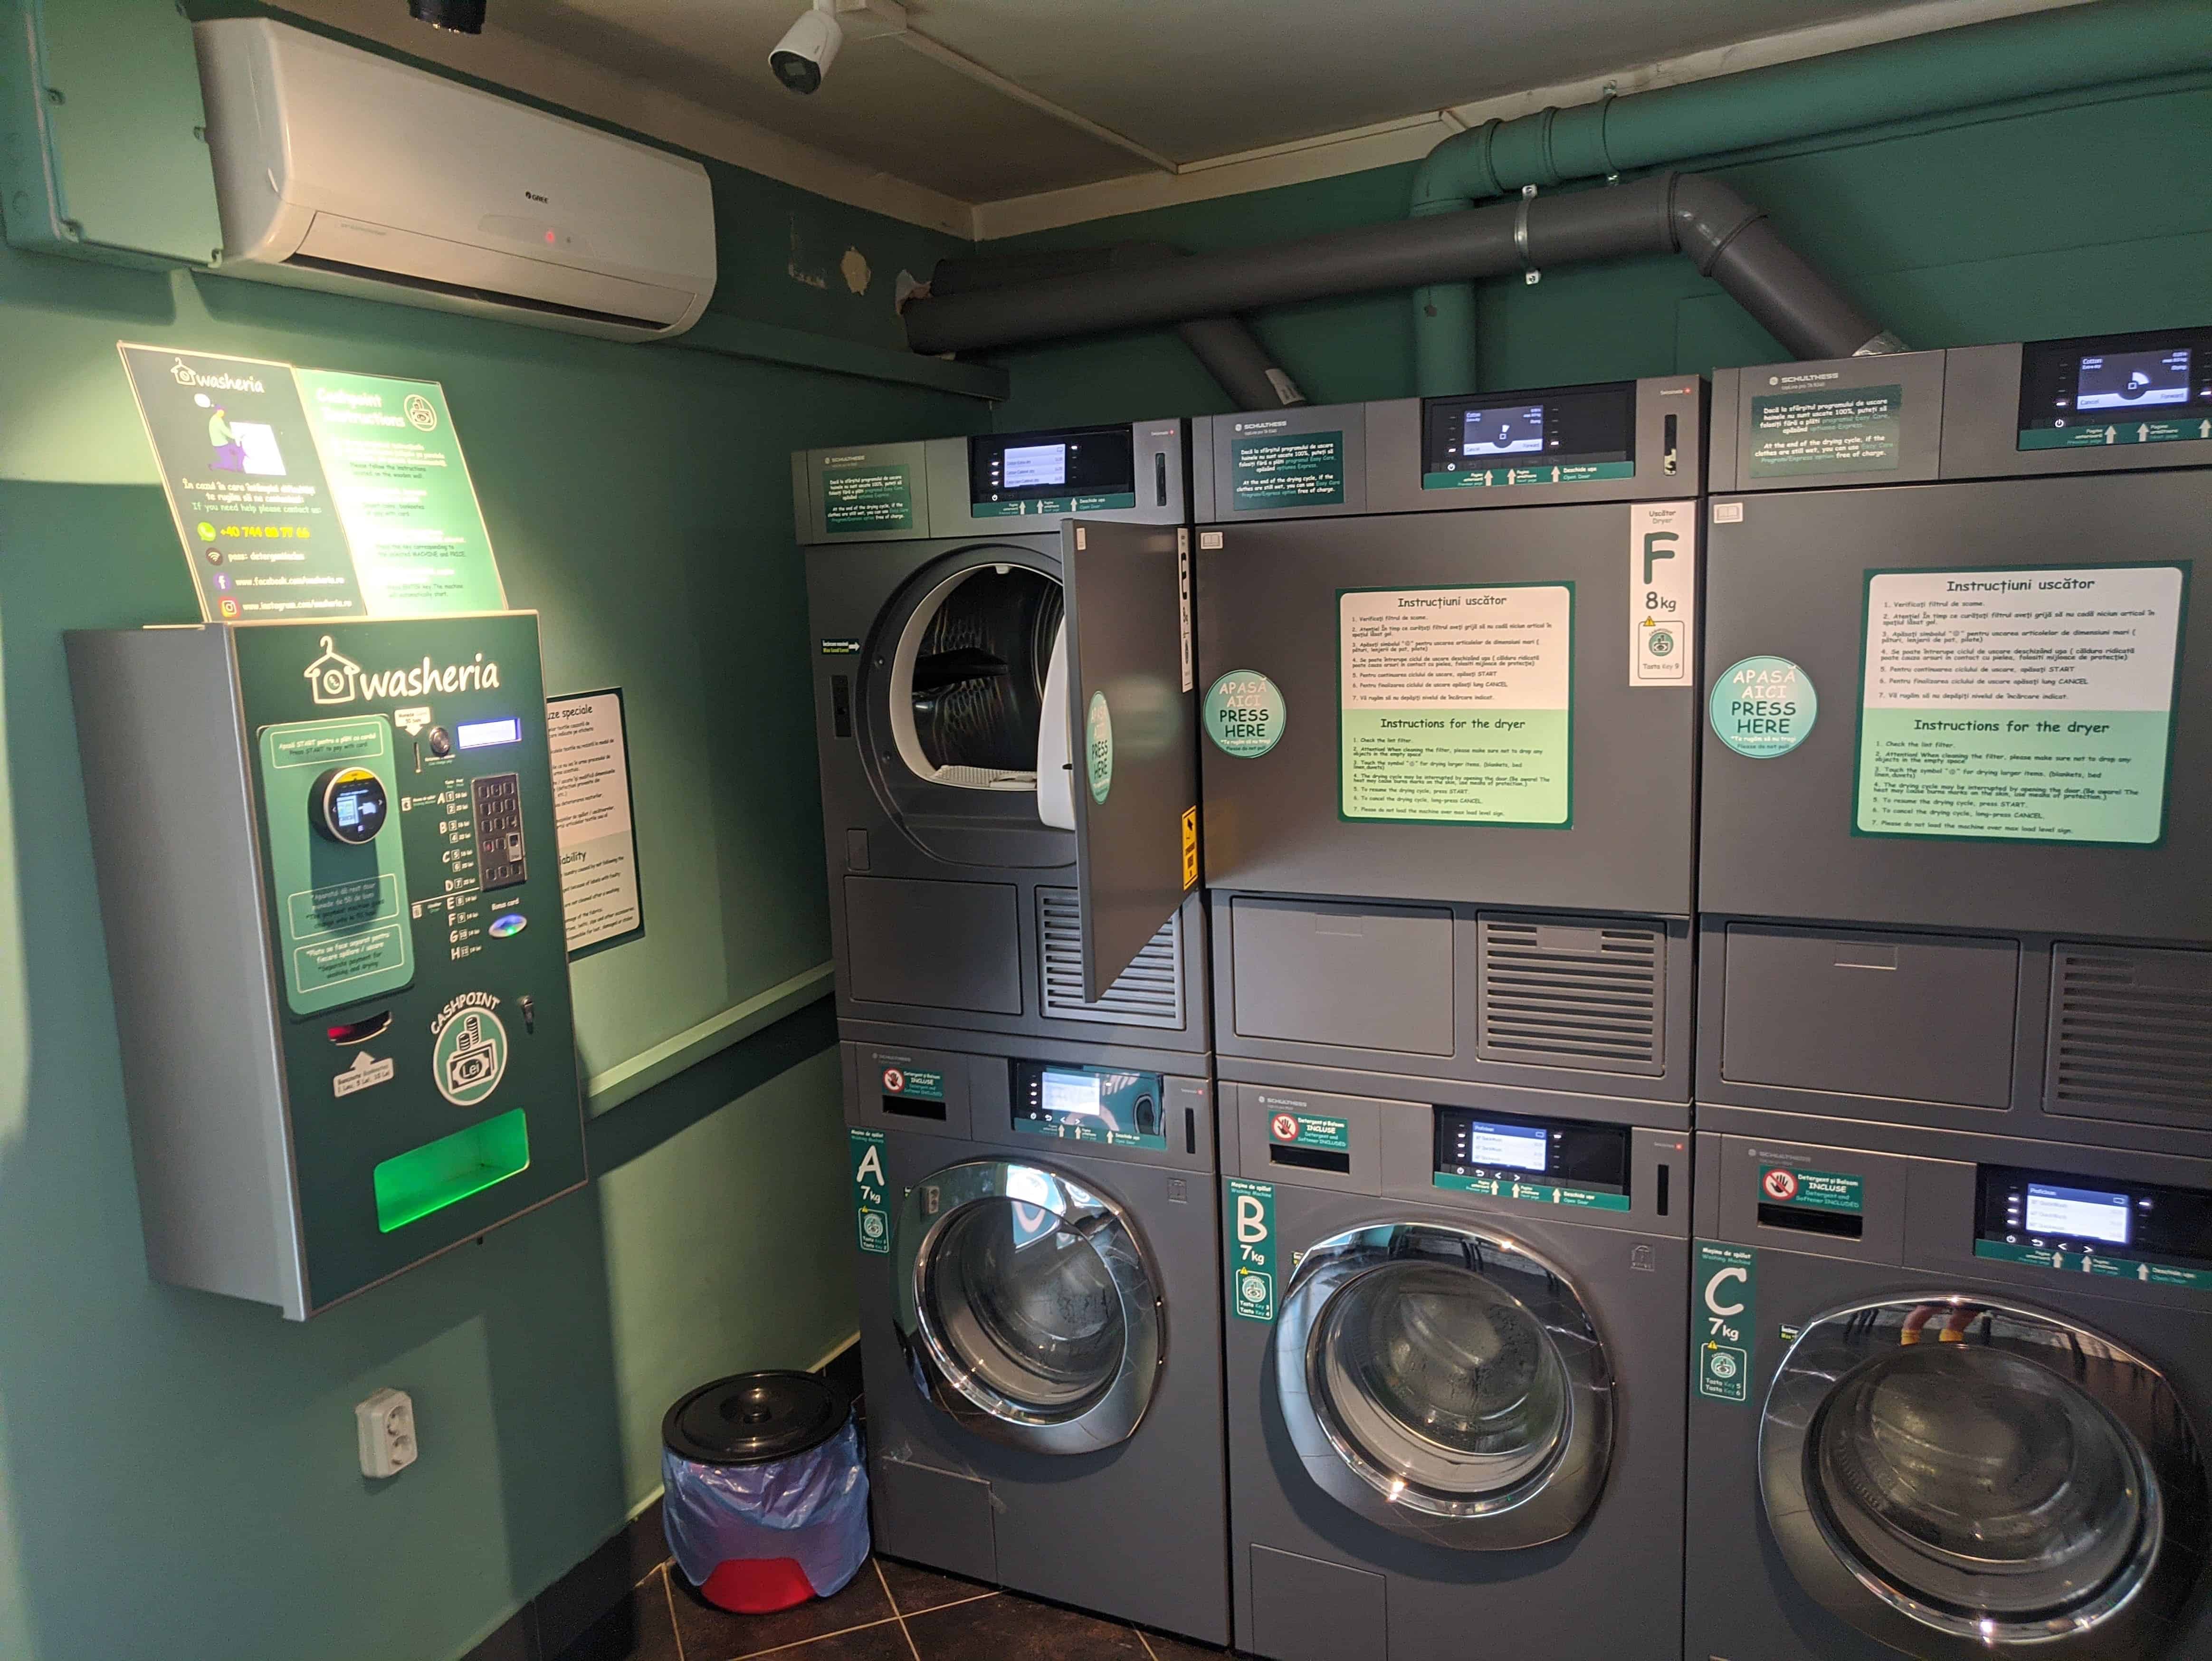 A very modern laundromat